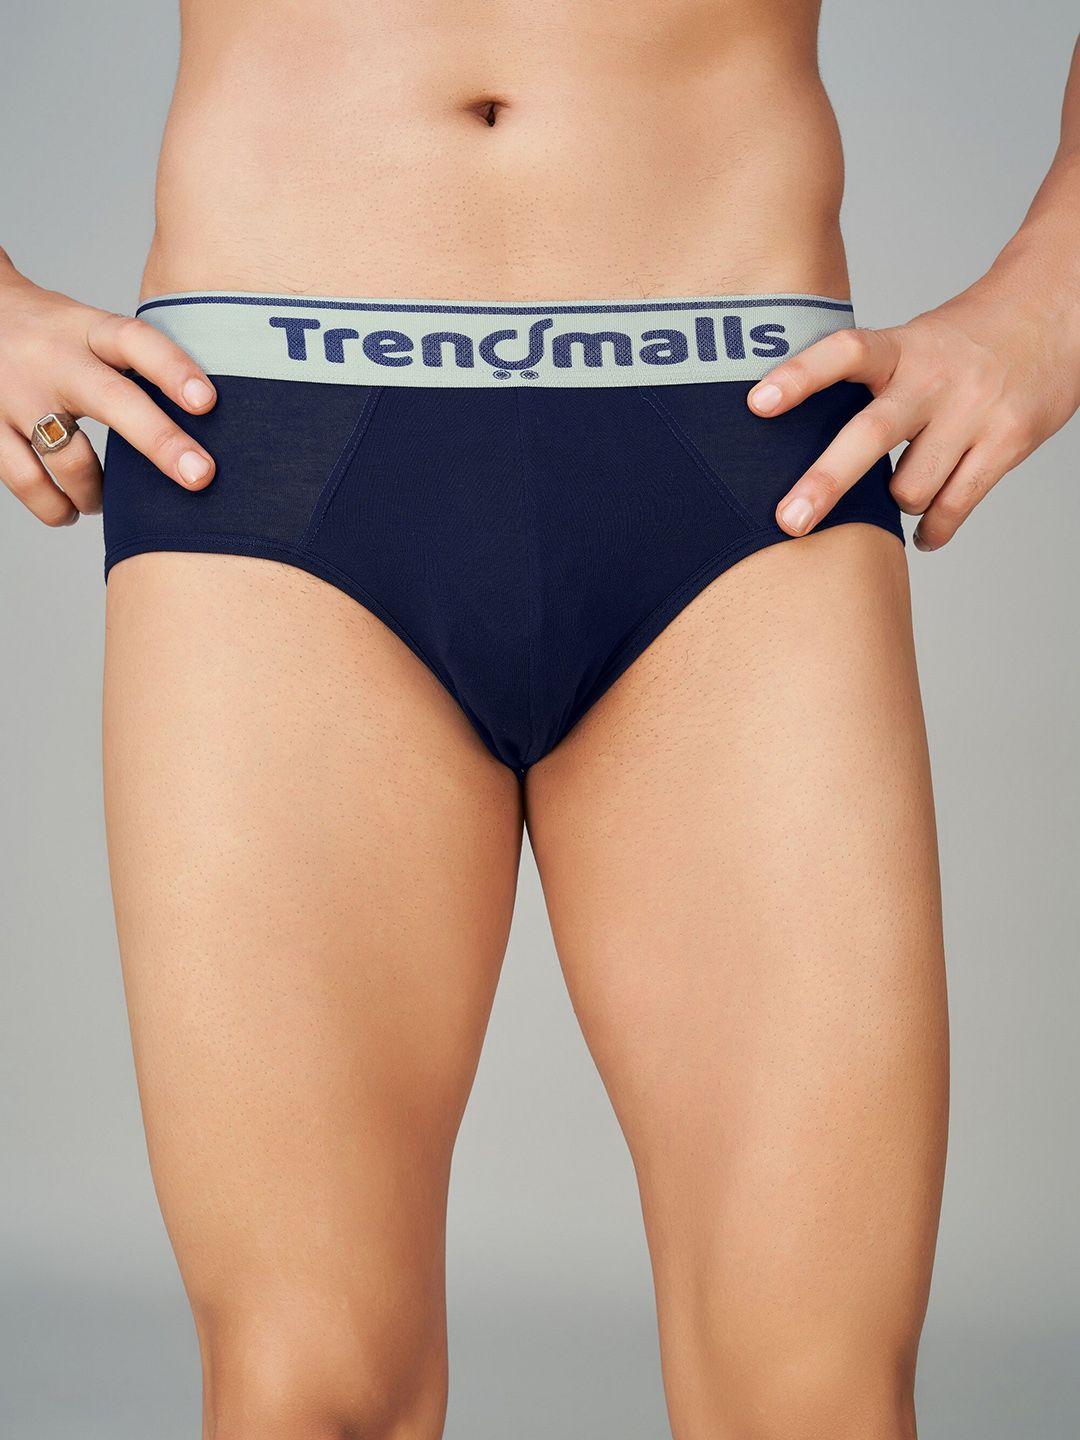 trendmalls-brand-logo-printed-4-way-stretch-modal-basic-brief-tm-mu01-navy-blue-s